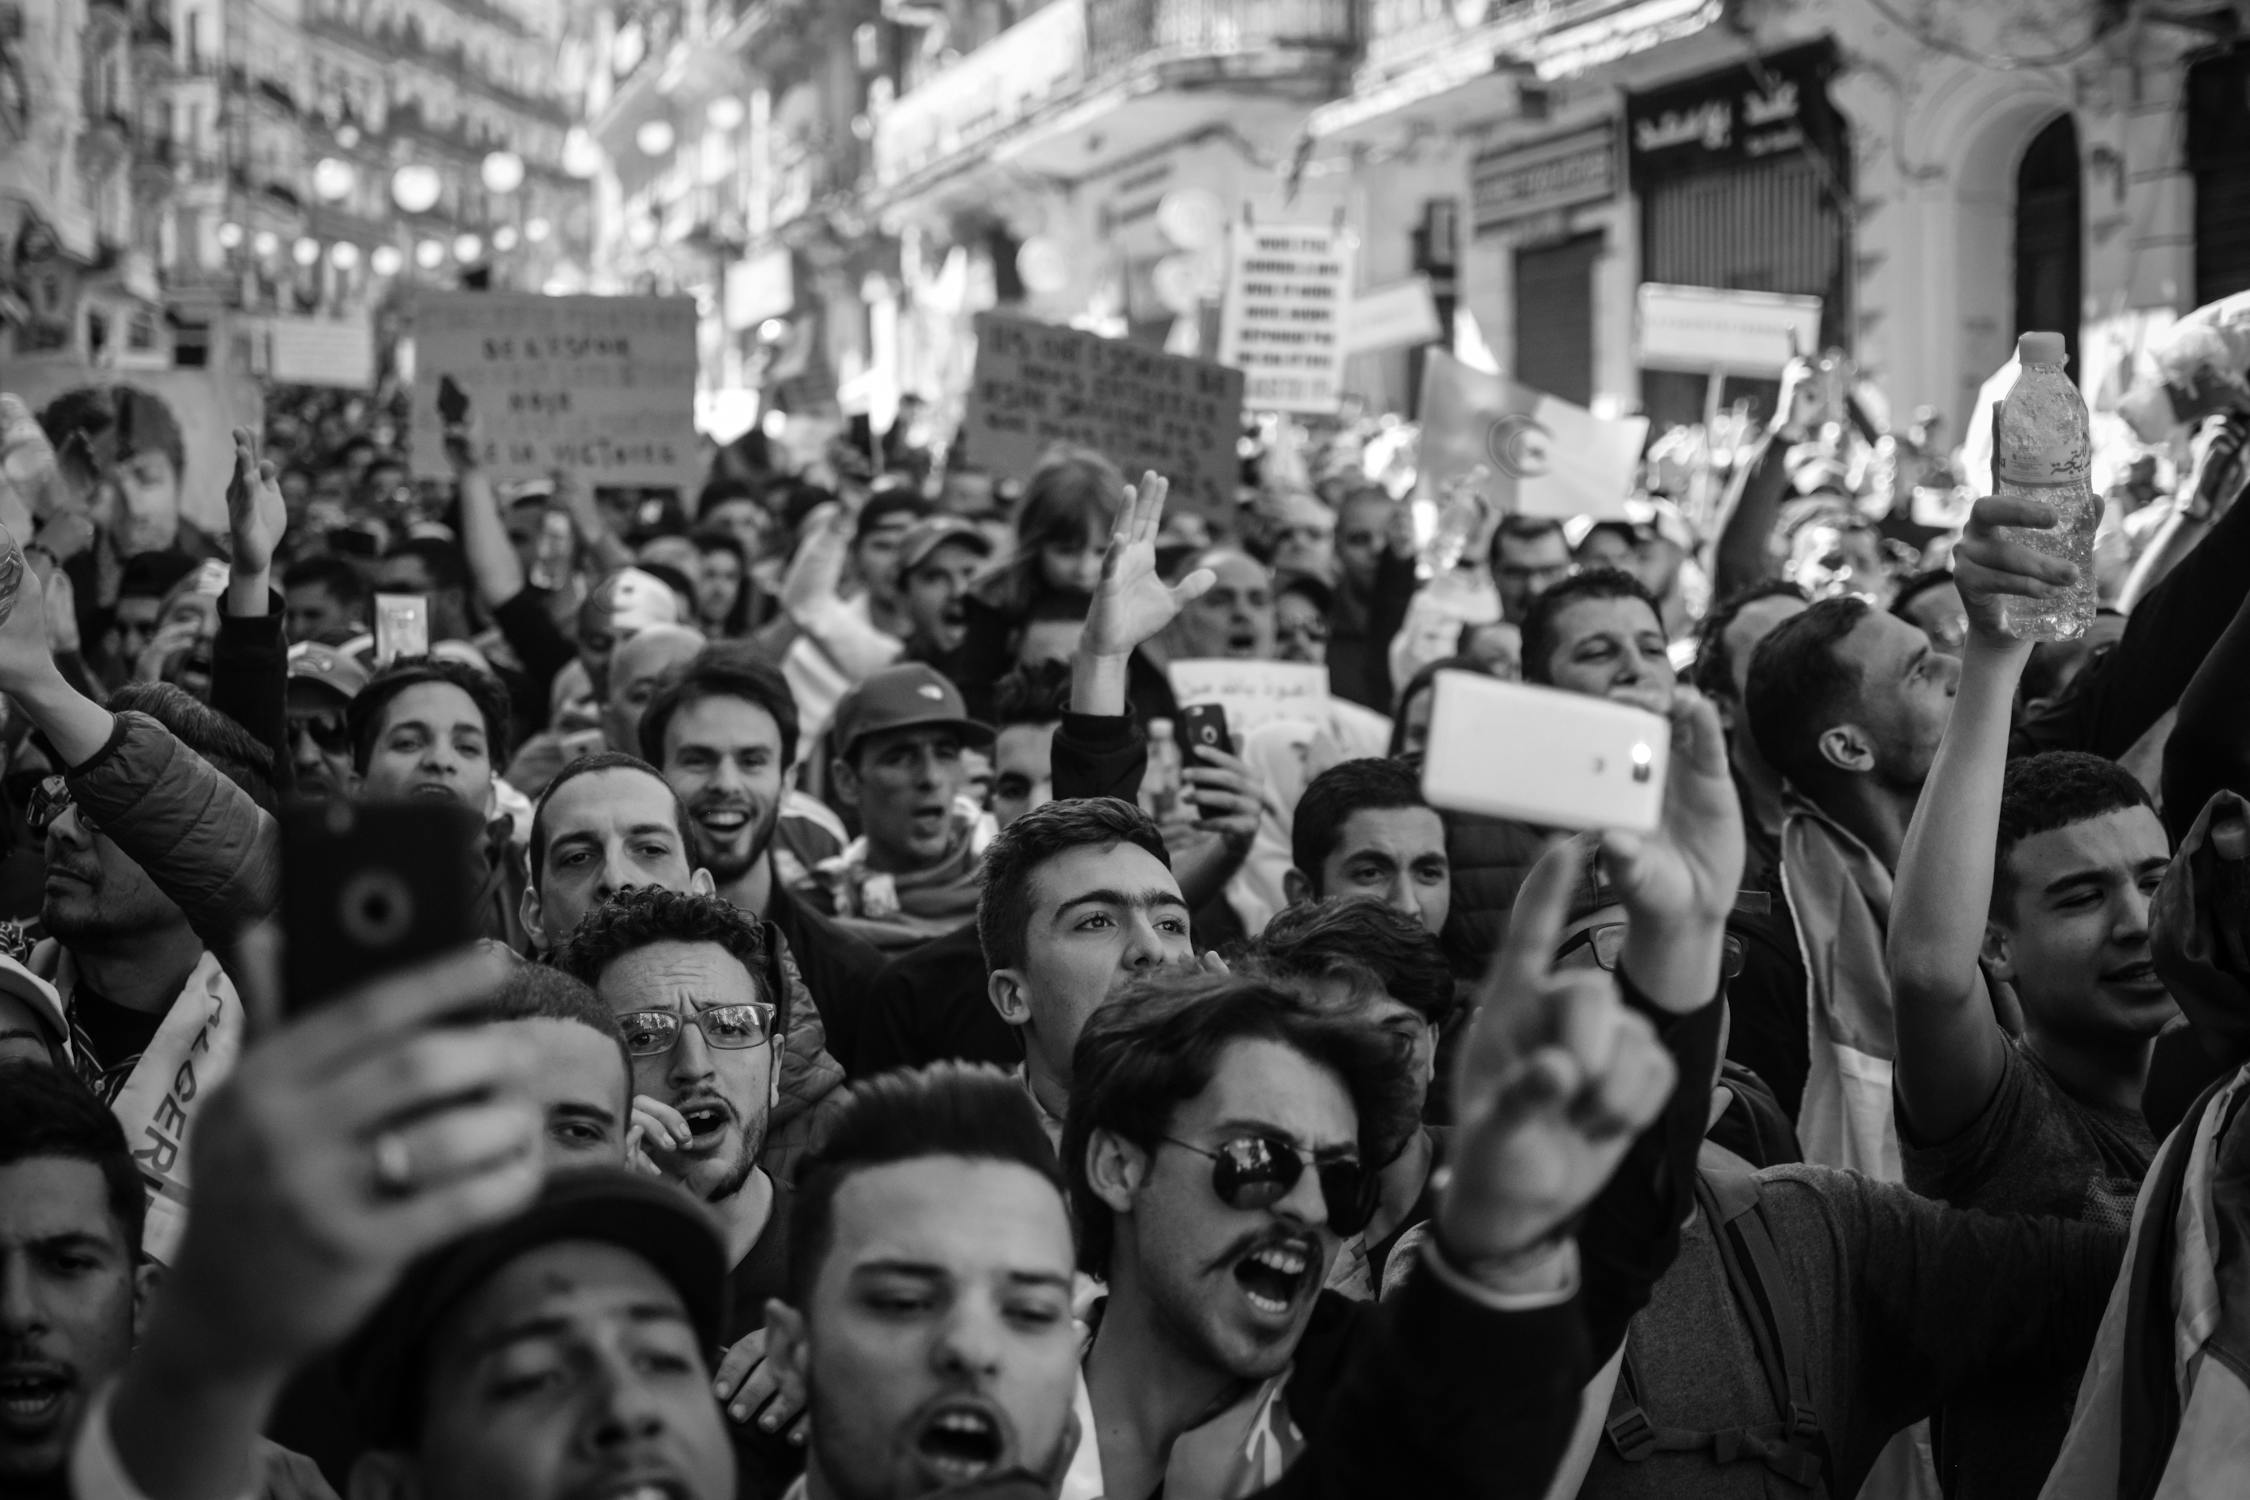 social-media-activism-uprising-crowd